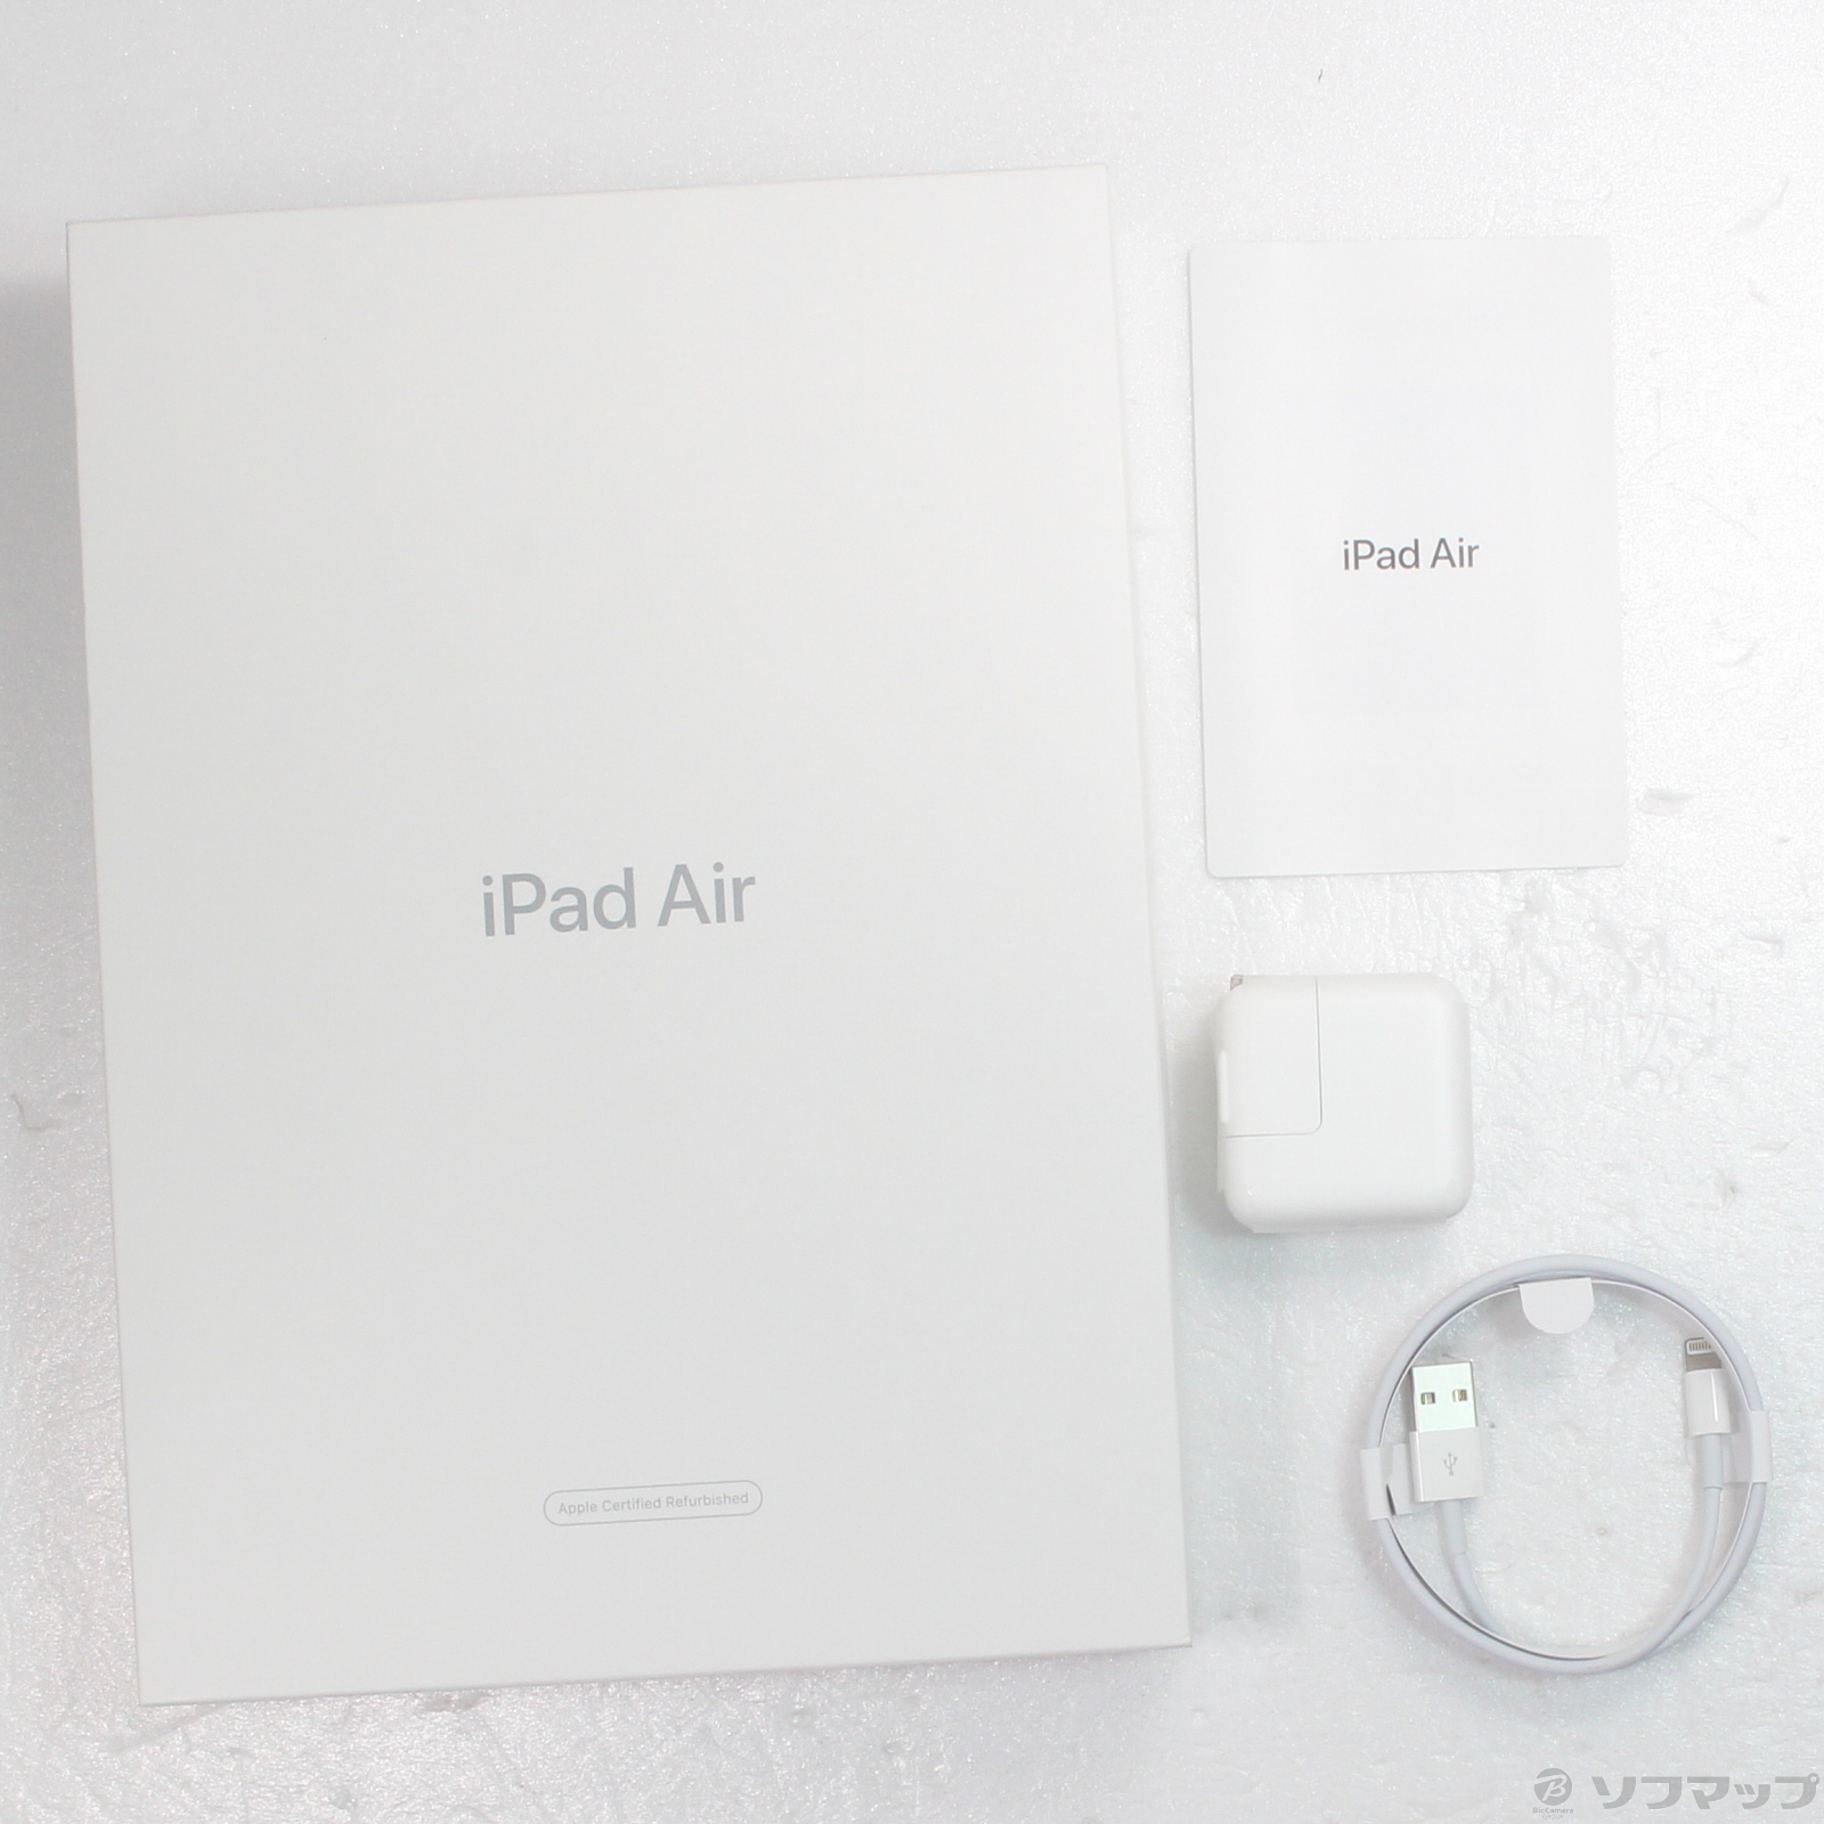 中古】iPad Air 第3世代 64GB ゴールド FUUL2J／A Wi-Fi